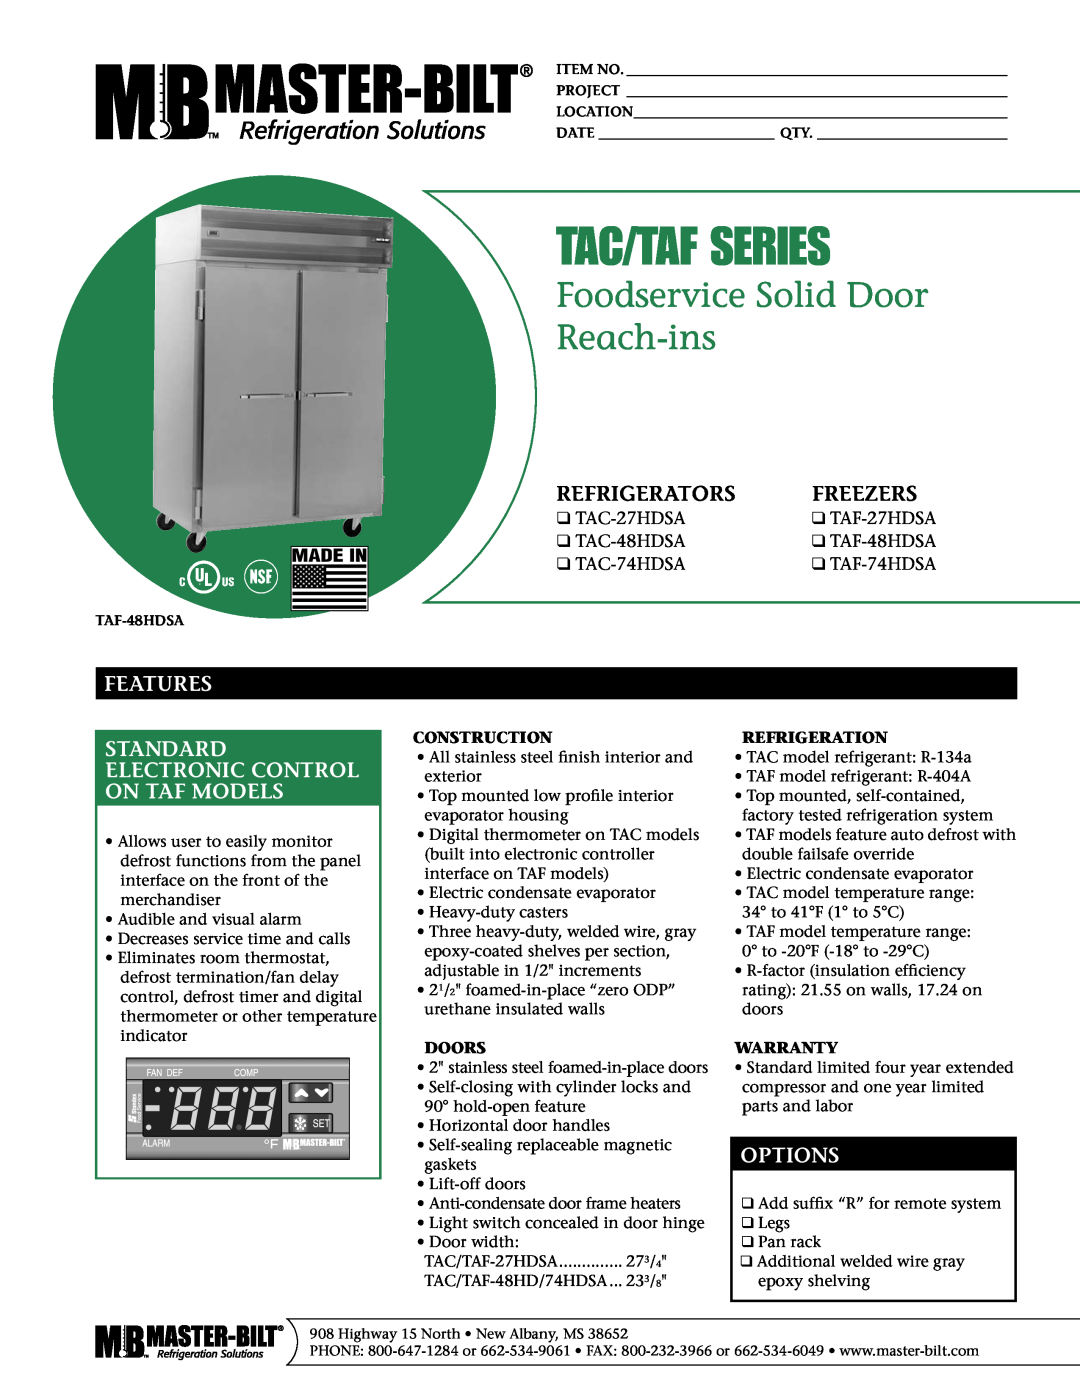 Master Bilt TAF-48HDSA warranty Refrigerators, Freezers, Features Standard Electronic Control On Taf Models, Options 